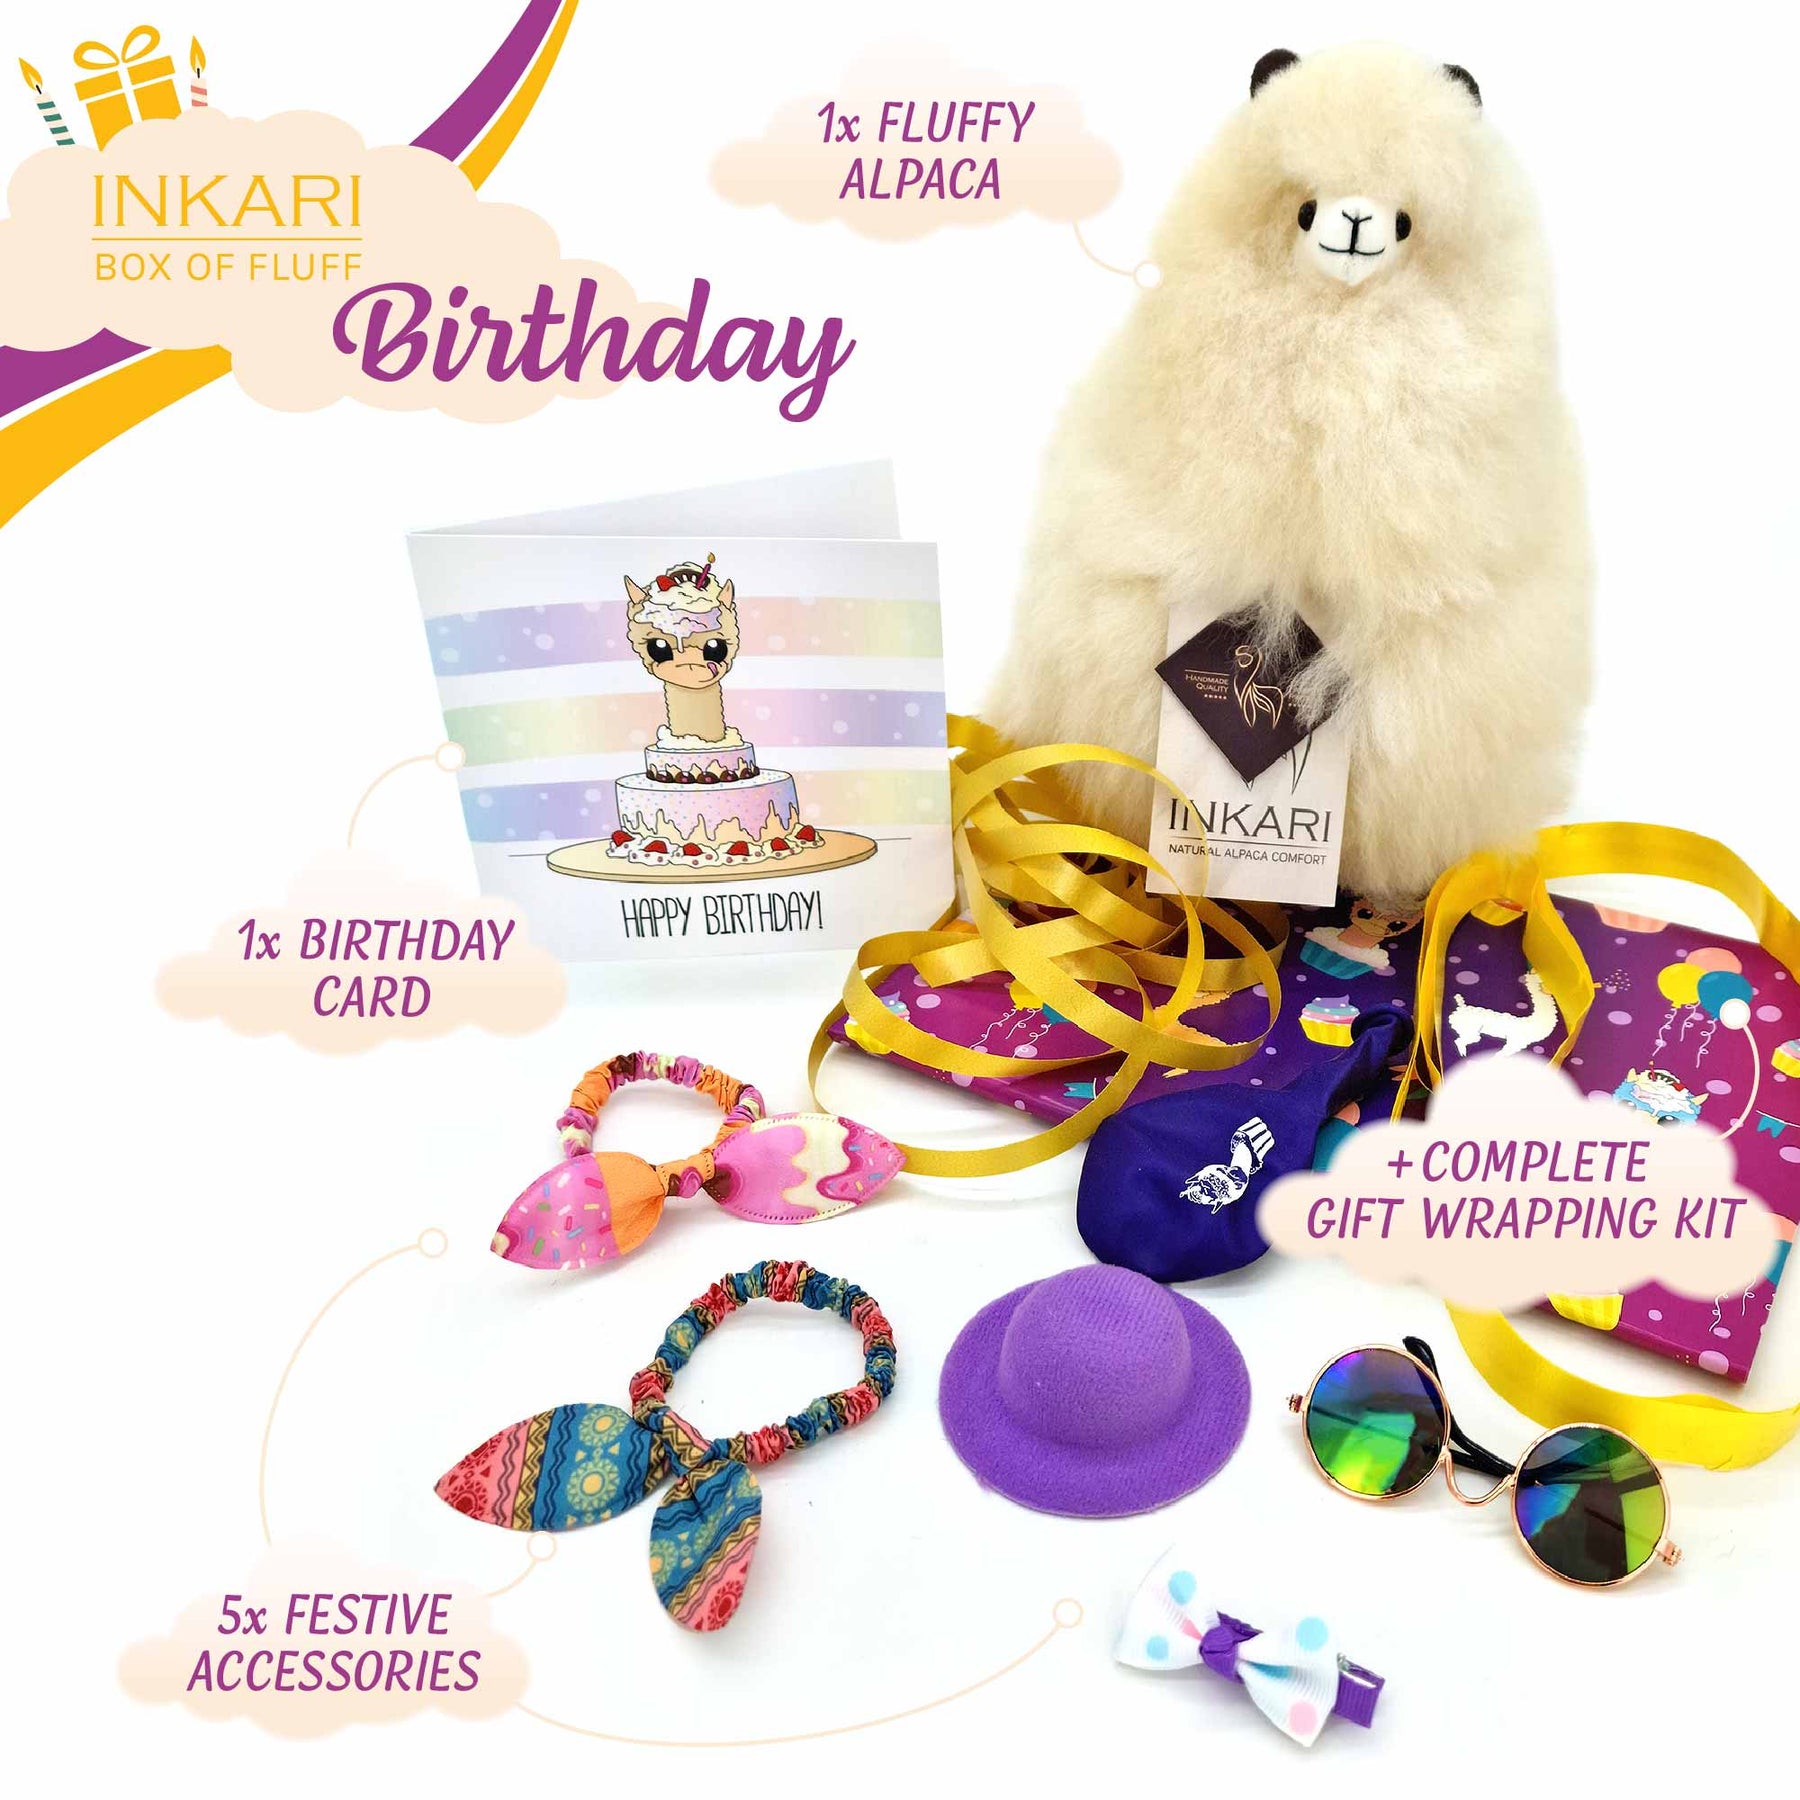 Box of Fluff - Birthday - Small Alpaca Toy